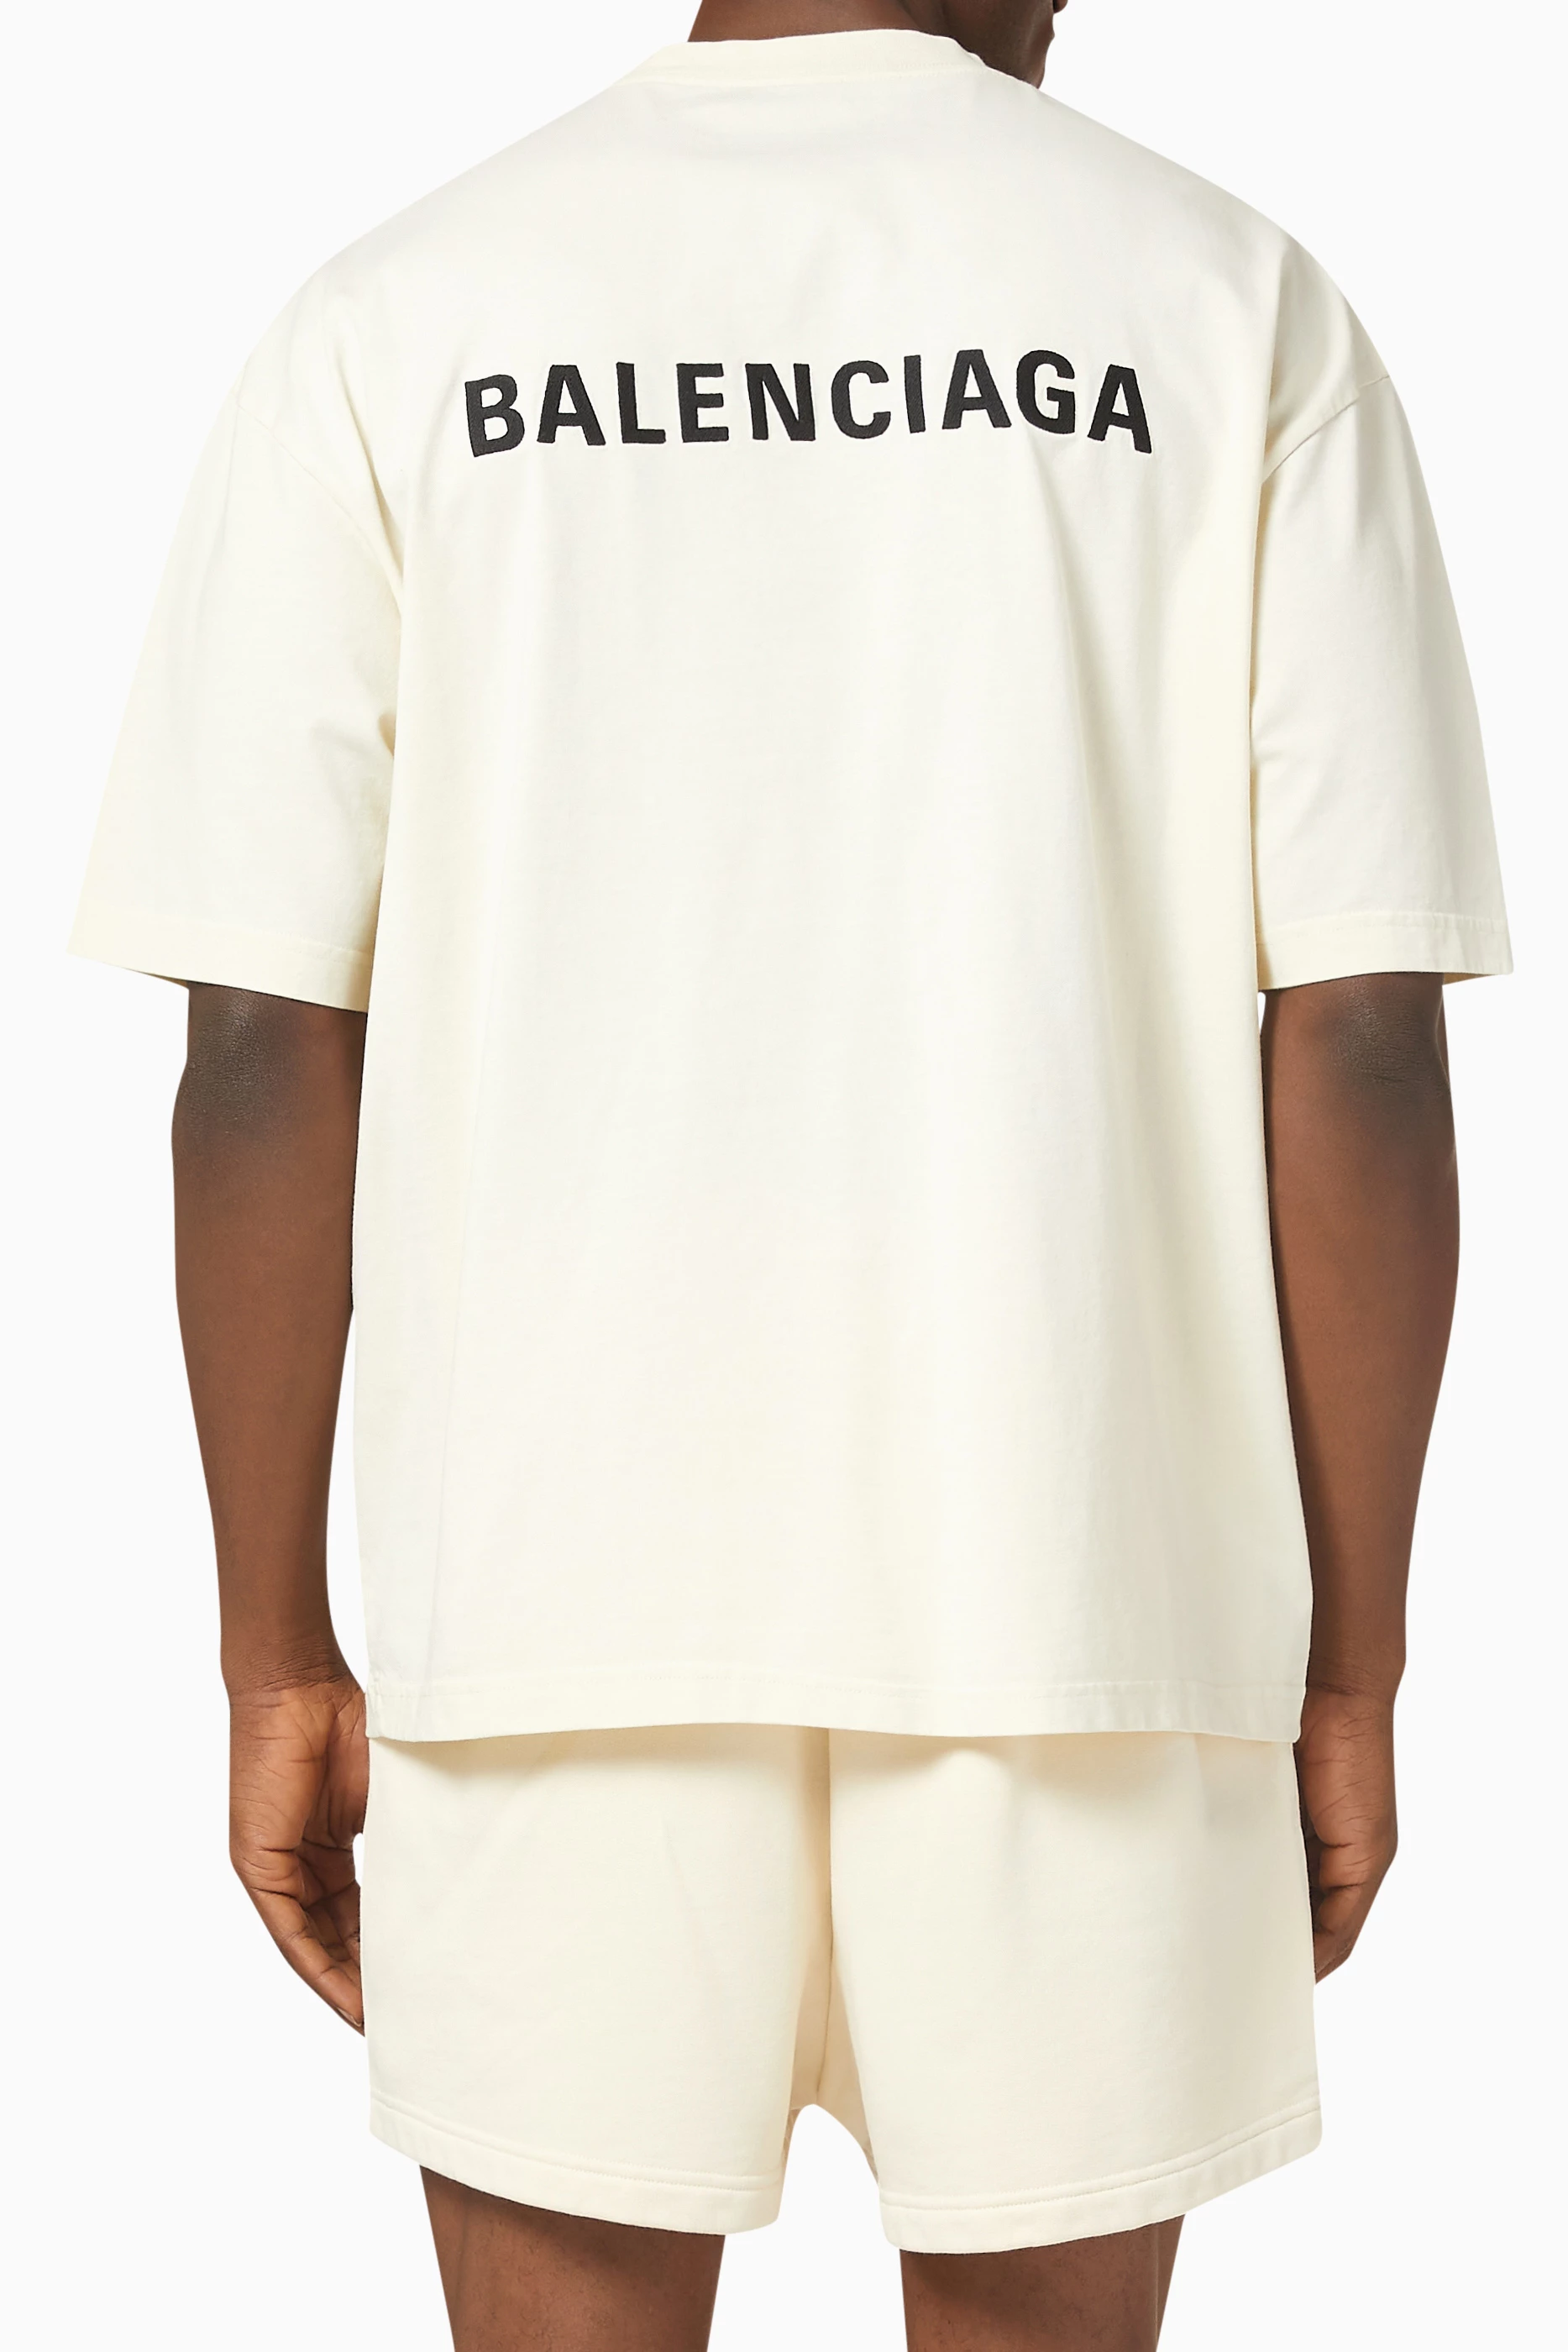 BALENCIAGA T-shirt Tシャツ | discovermediaworks.com